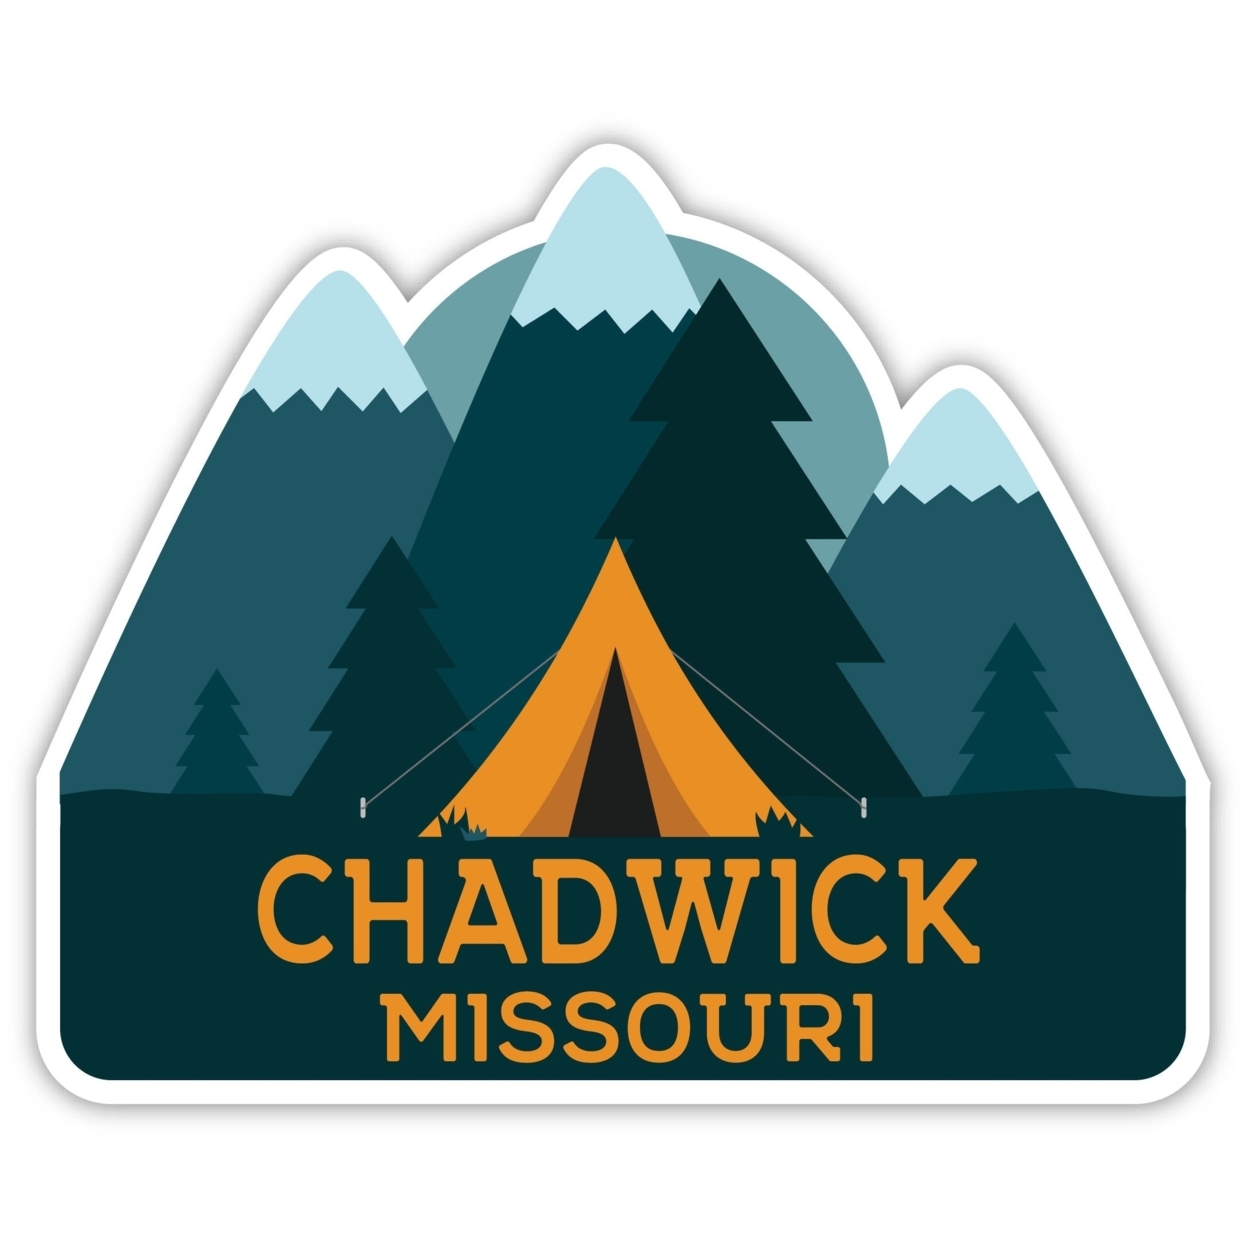 Chadwick Missouri Souvenir Decorative Stickers (Choose Theme And Size) - 4-Pack, 4-Inch, Tent